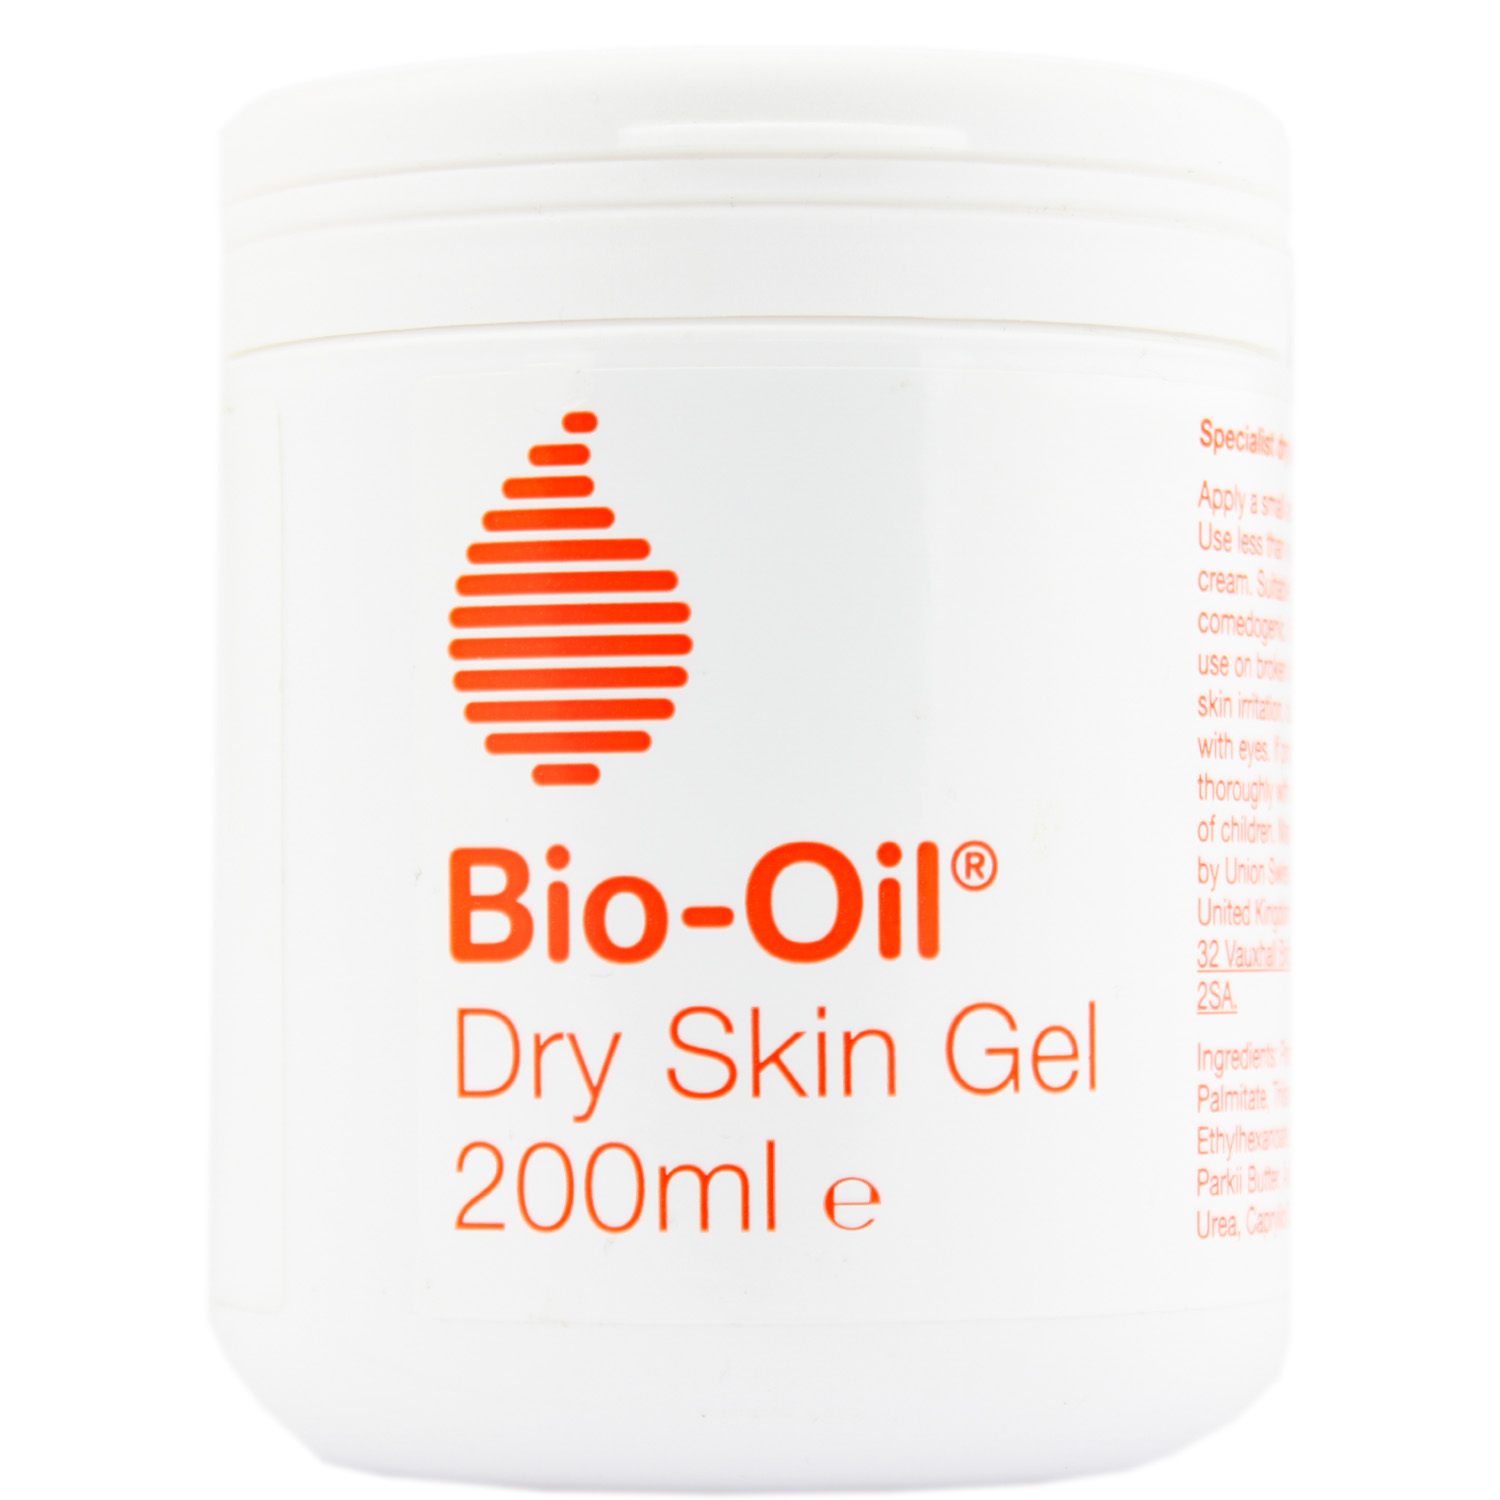 Bio-Oil Dry Skin Gel 200ml